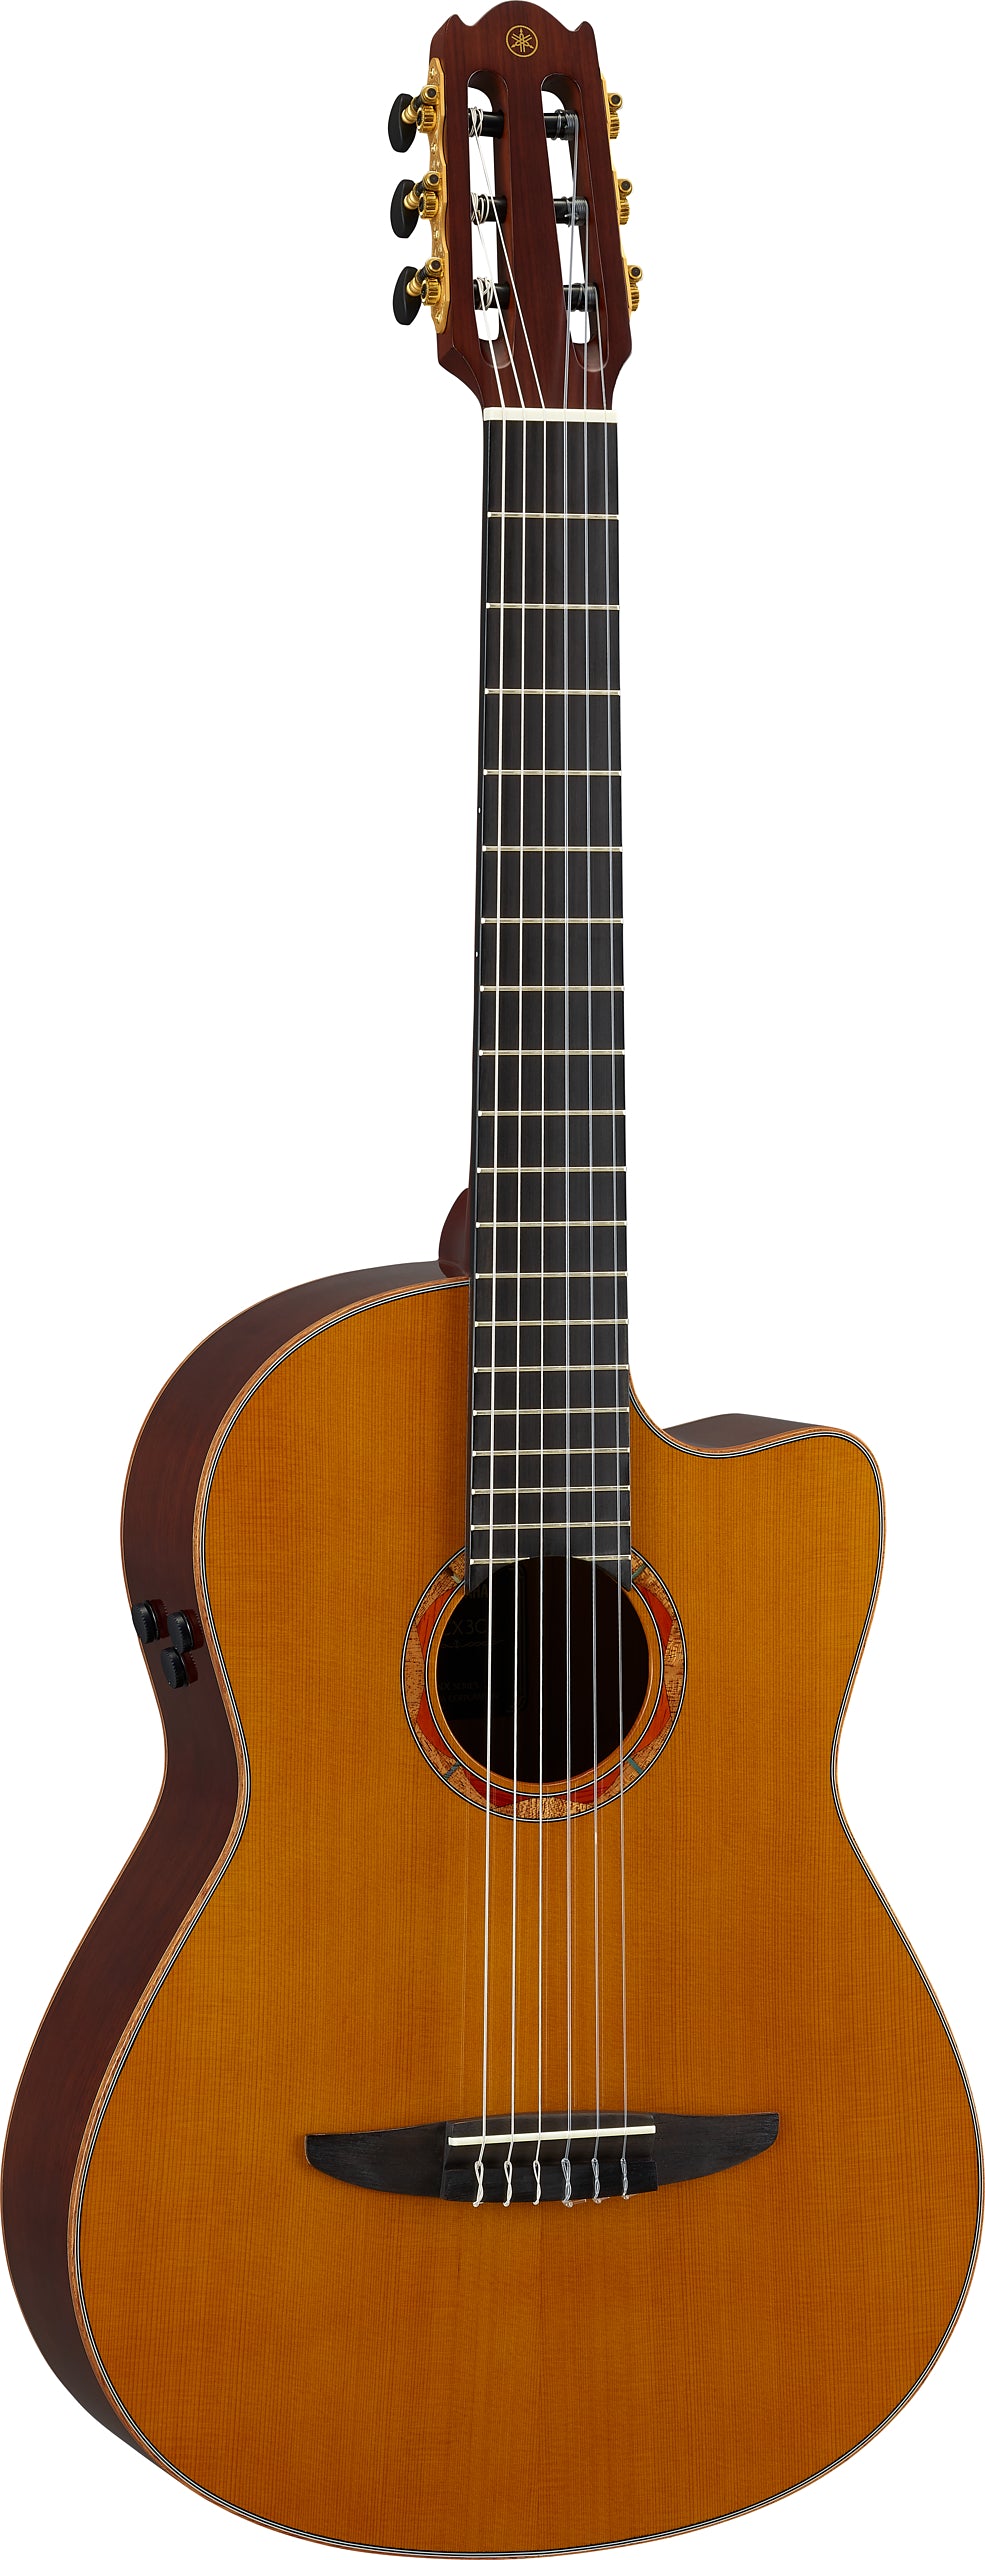 Yamaha NCX3C All-Solid Acoustic Electric Nylon String Guitar - Cedar Top